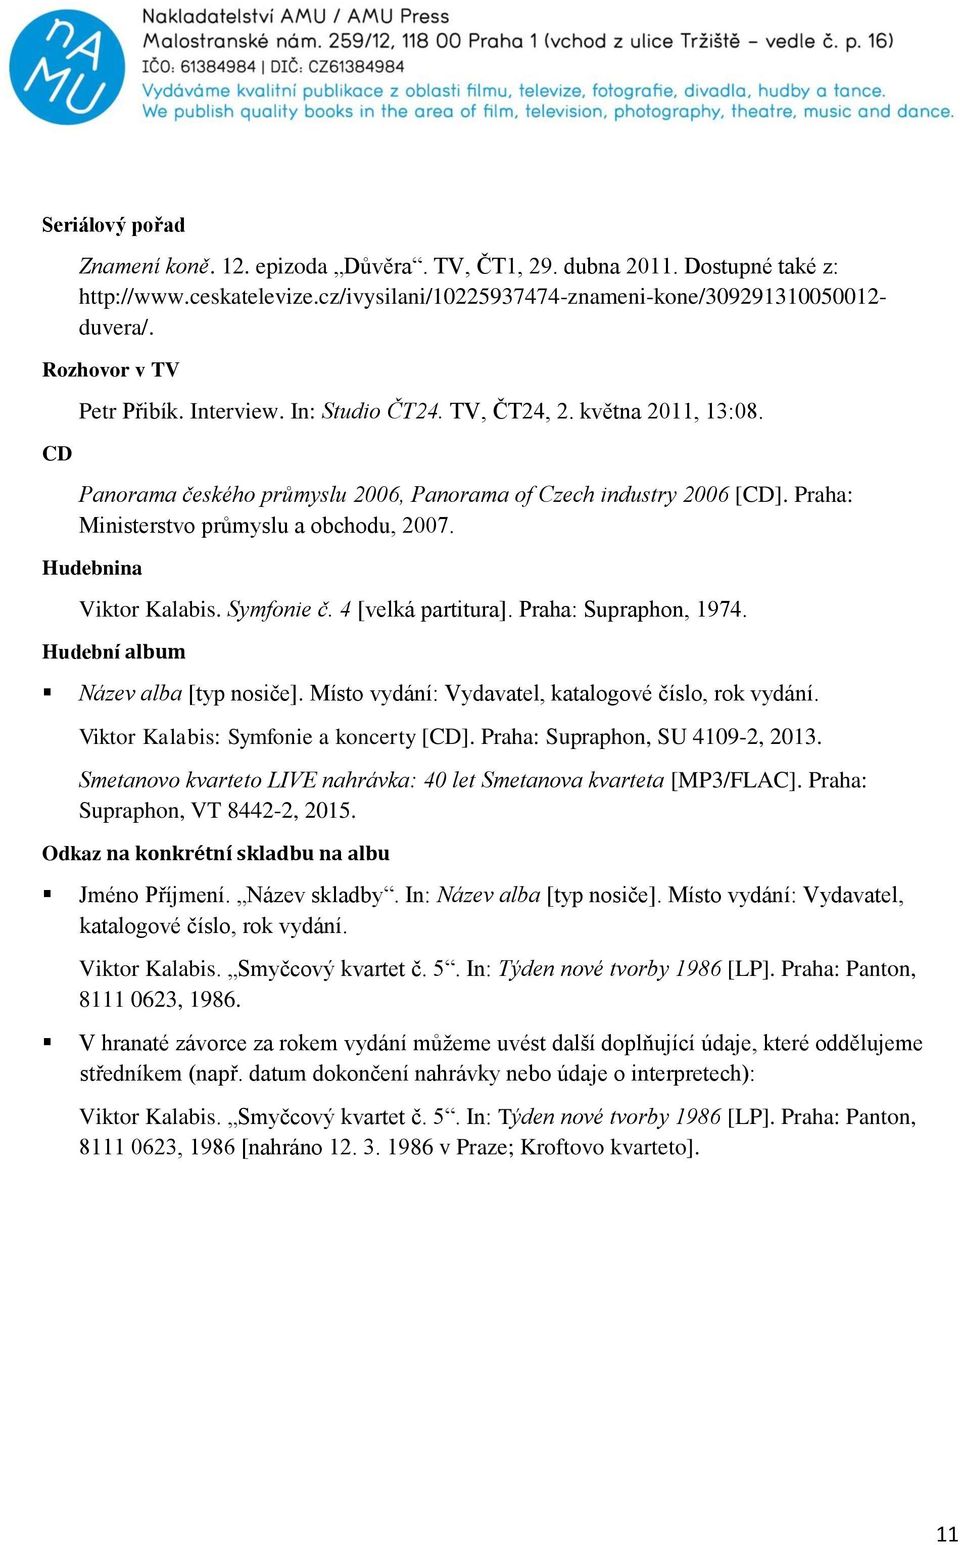 Praha: Ministerstvo průmyslu a obchodu, 2007. Hudebnina Viktor Kalabis. Symfonie č. 4 [velká partitura]. Praha: Supraphon, 1974. Hudební album Název alba [typ nosiče].